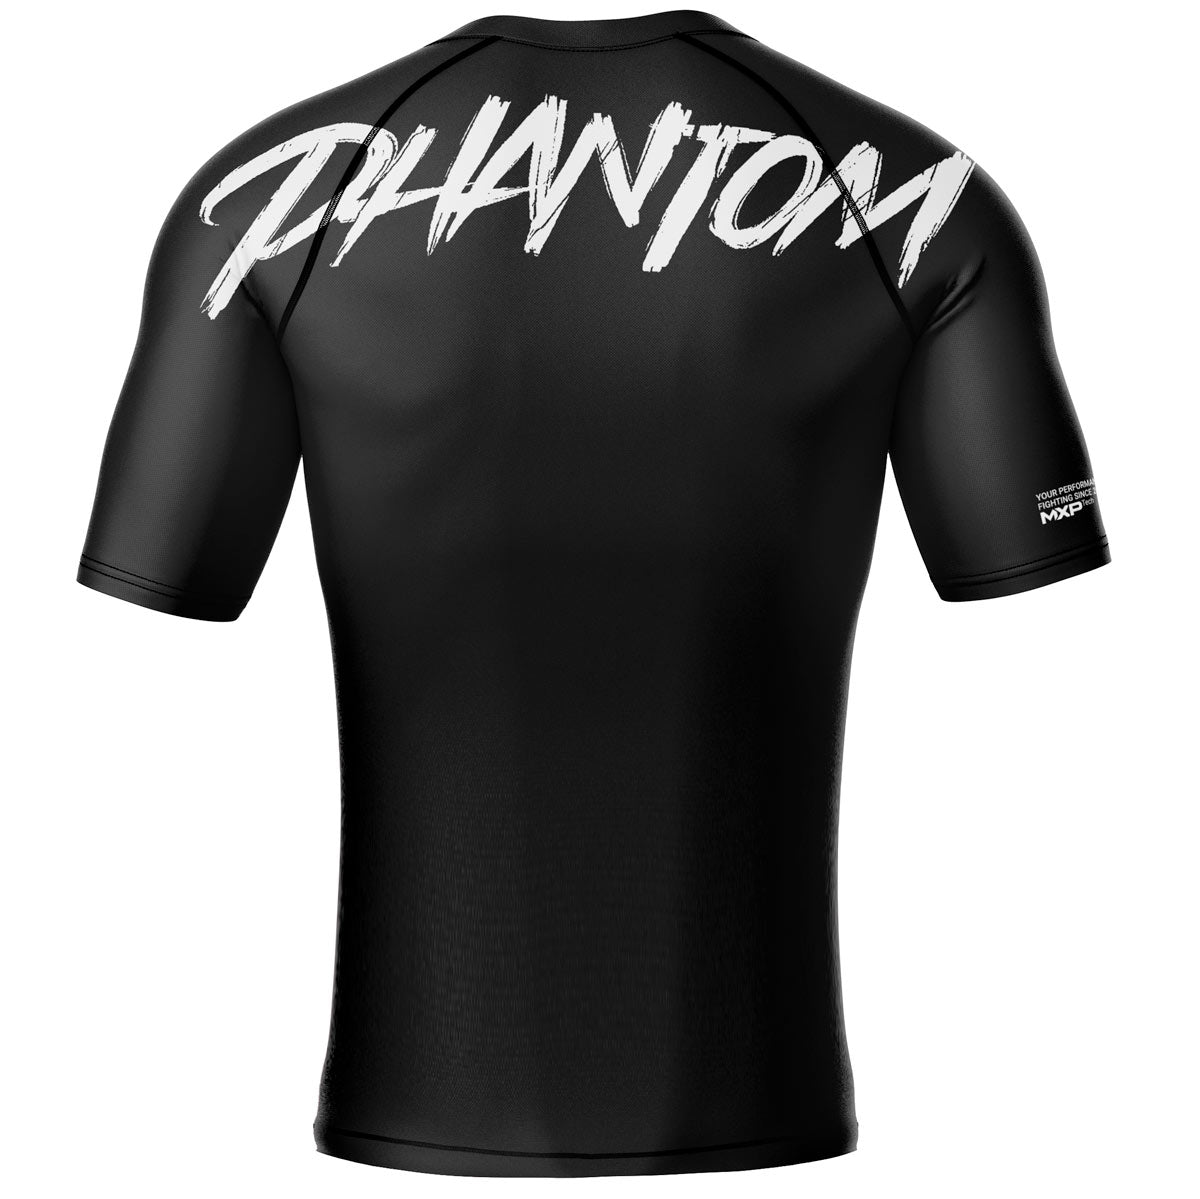 Phantom nemilosrdni MMA štitnik za bjdž i grappling sa velikim natpisom PHANTOM preko ramena.